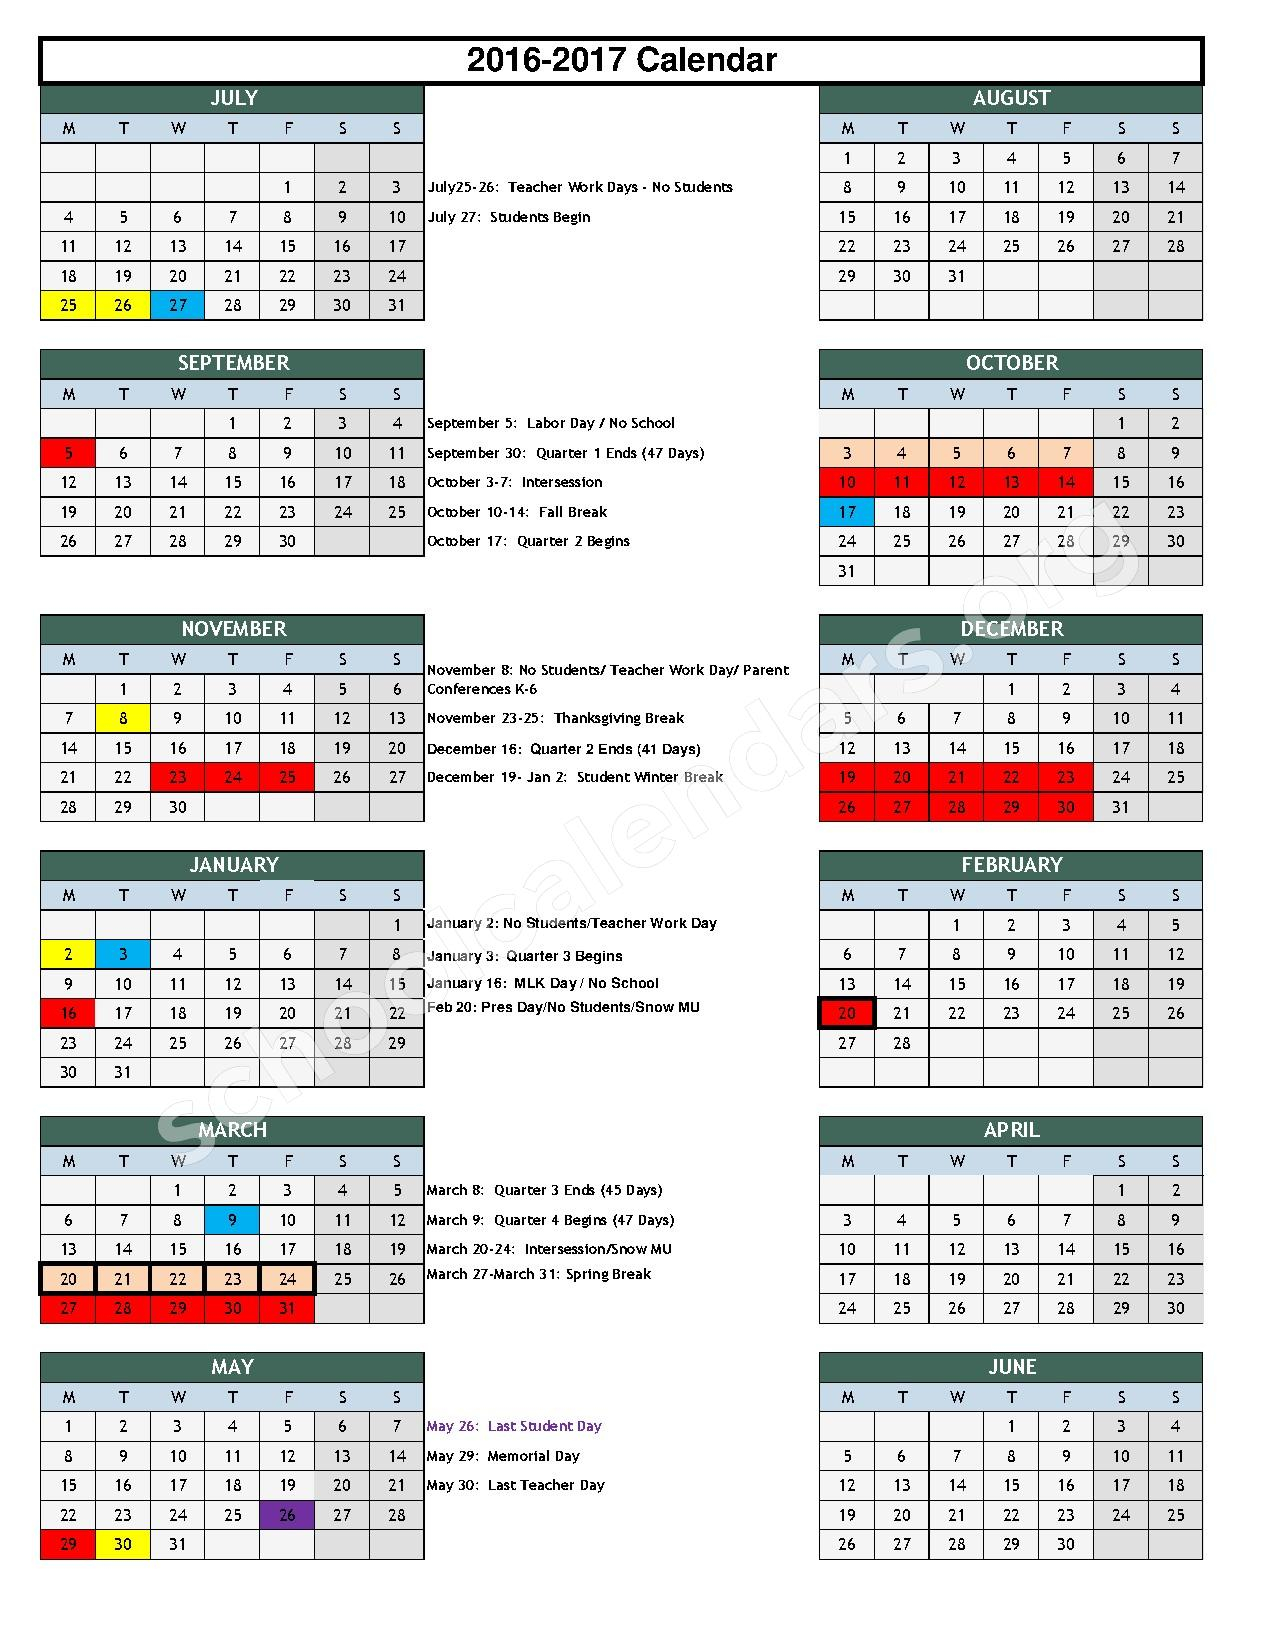 New Albany Floyd County School Calendar 2022 2023 Schoolcalendars